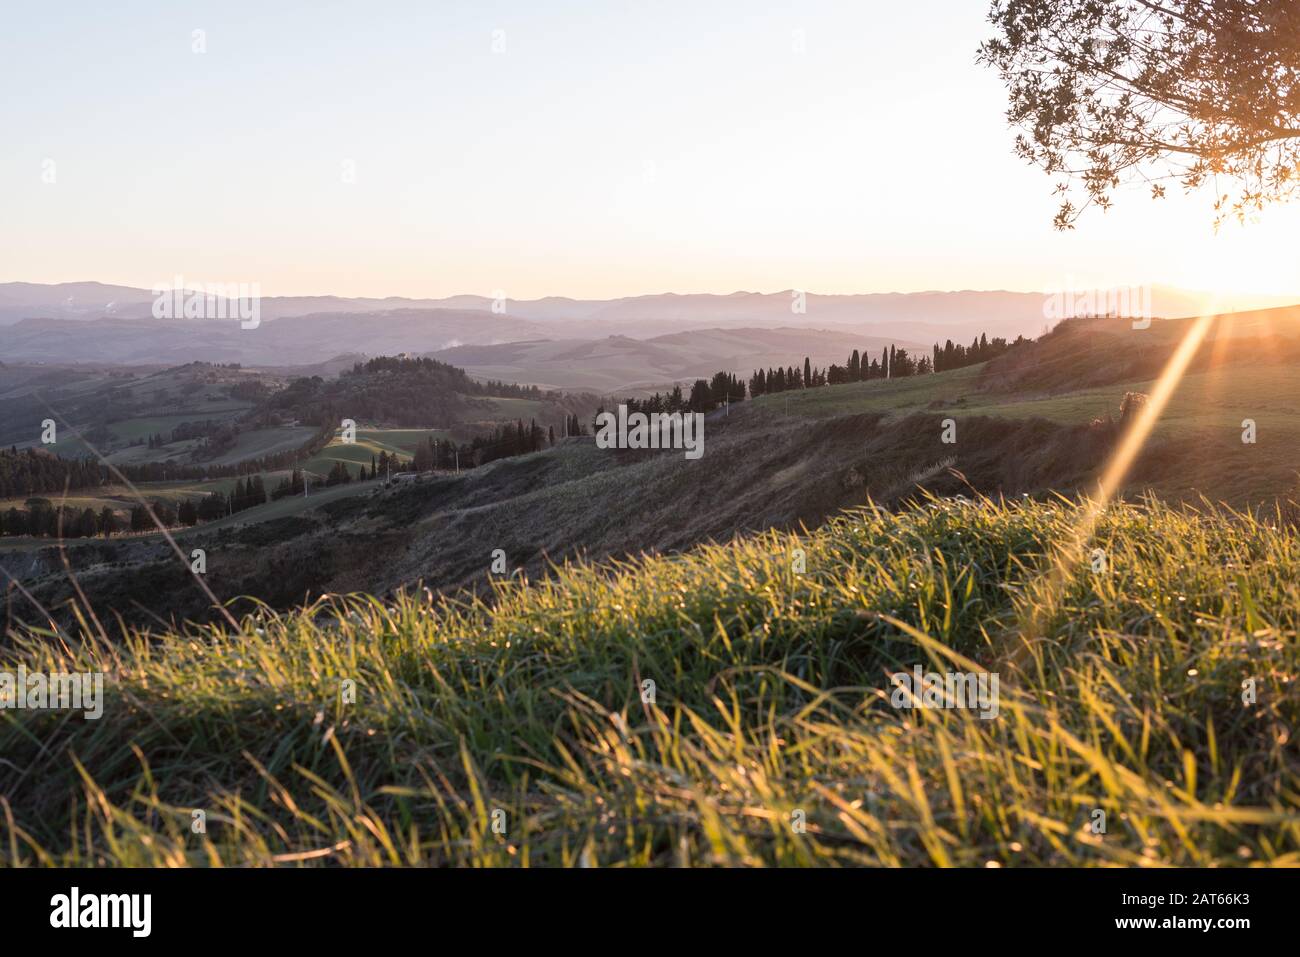 Toscana colinas campiña paisaje italiano colorido al atardecer. Italia. Luz solar directa en la cámara Foto de stock